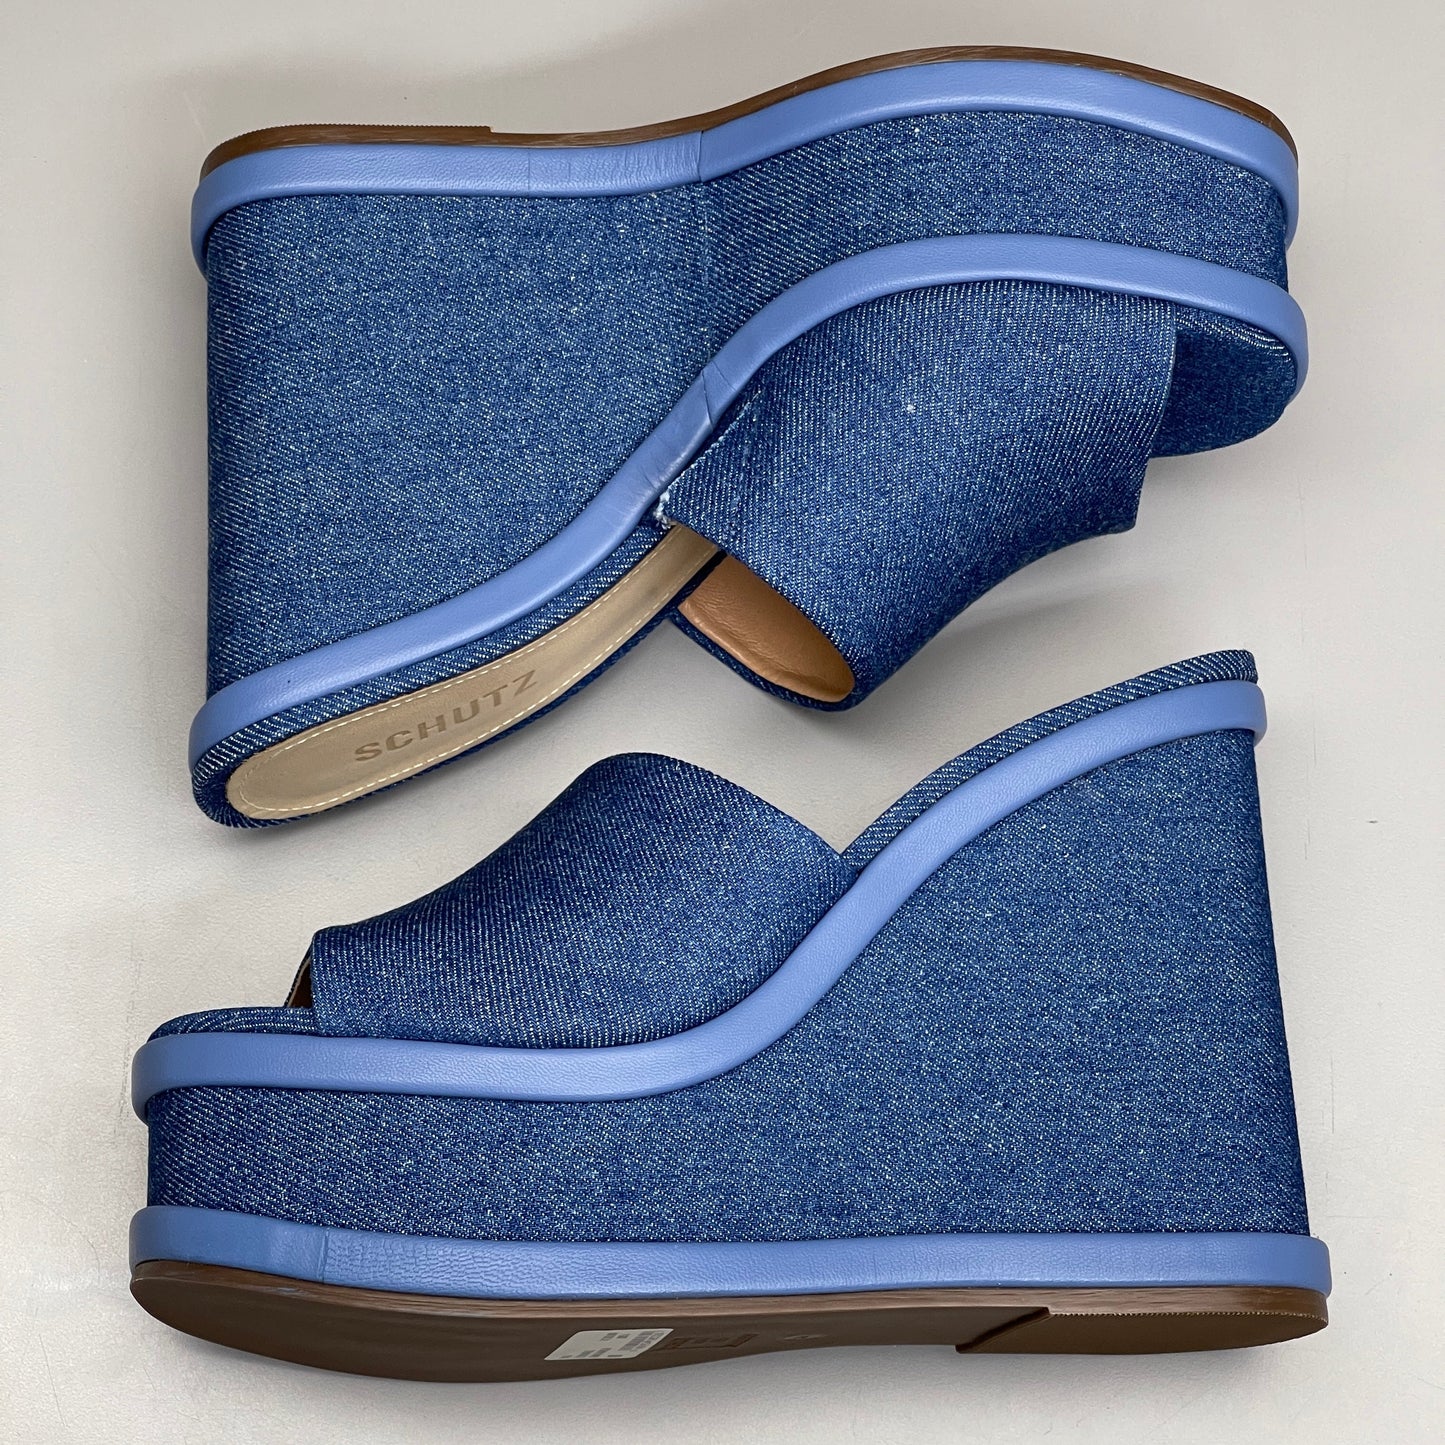 SCHUTZ Dalle Denim Women's Wedge Sandal Blue Platform Shoe Sz 7.5B (New)